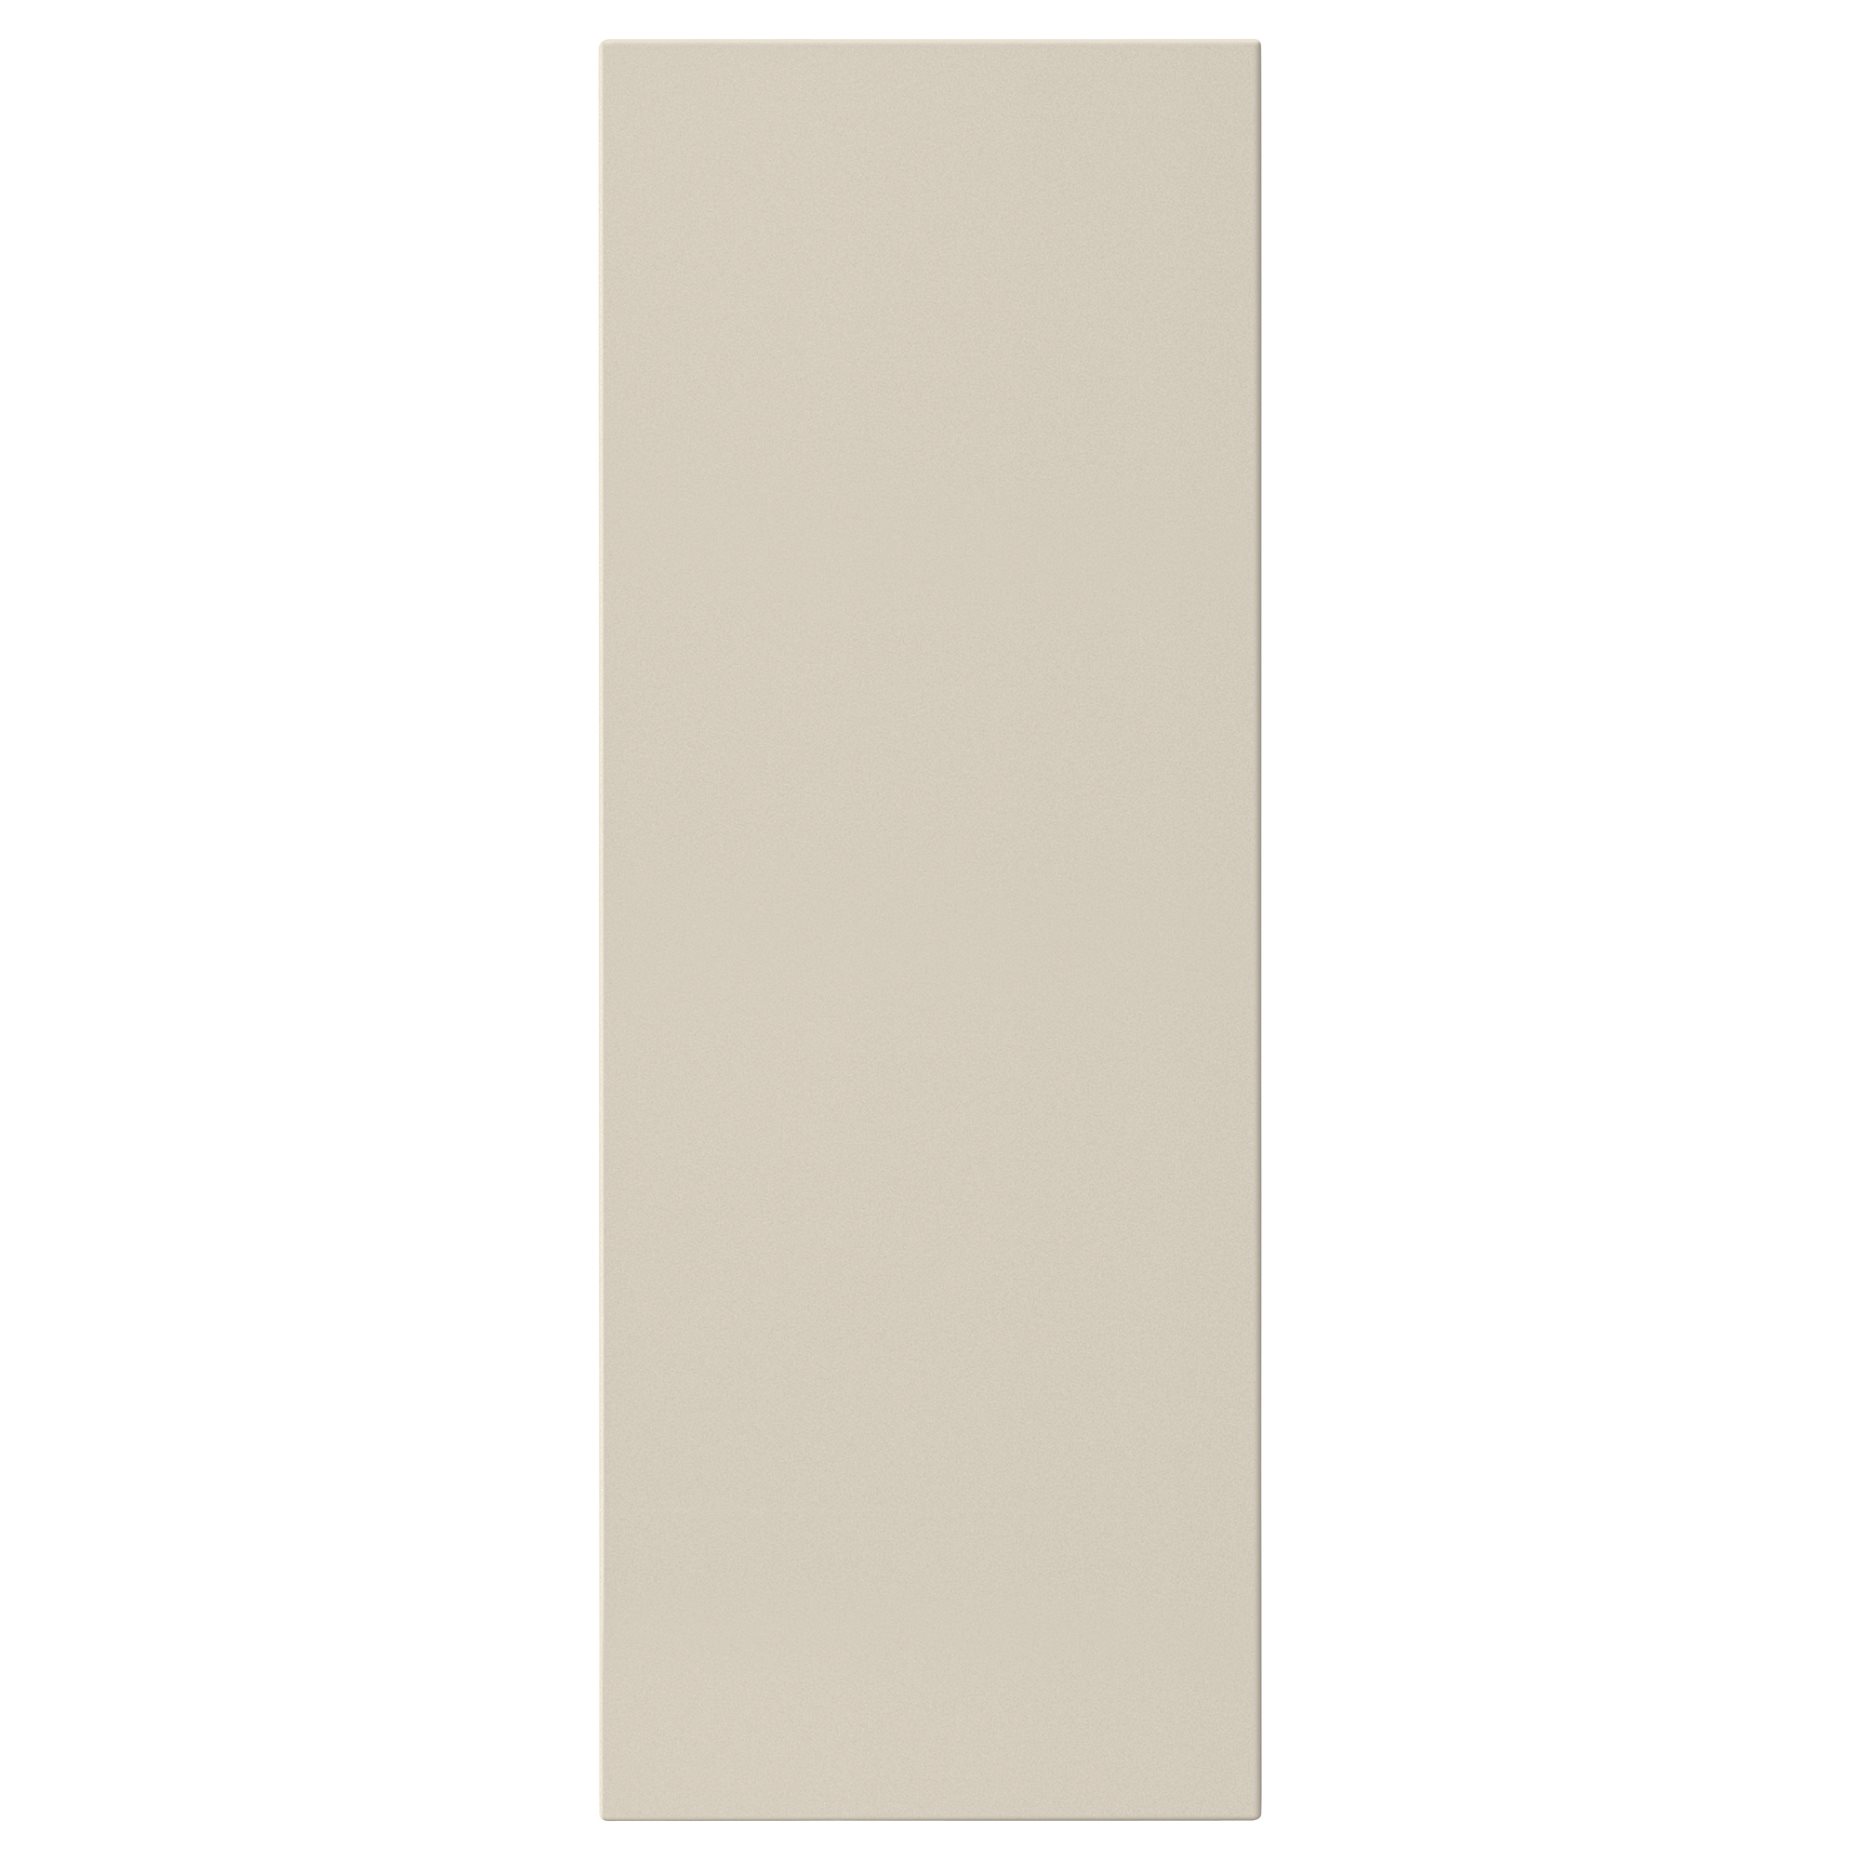 HAVSTORP, πλαϊνή επιφάνεια, 39x106 cm, 904.752.49